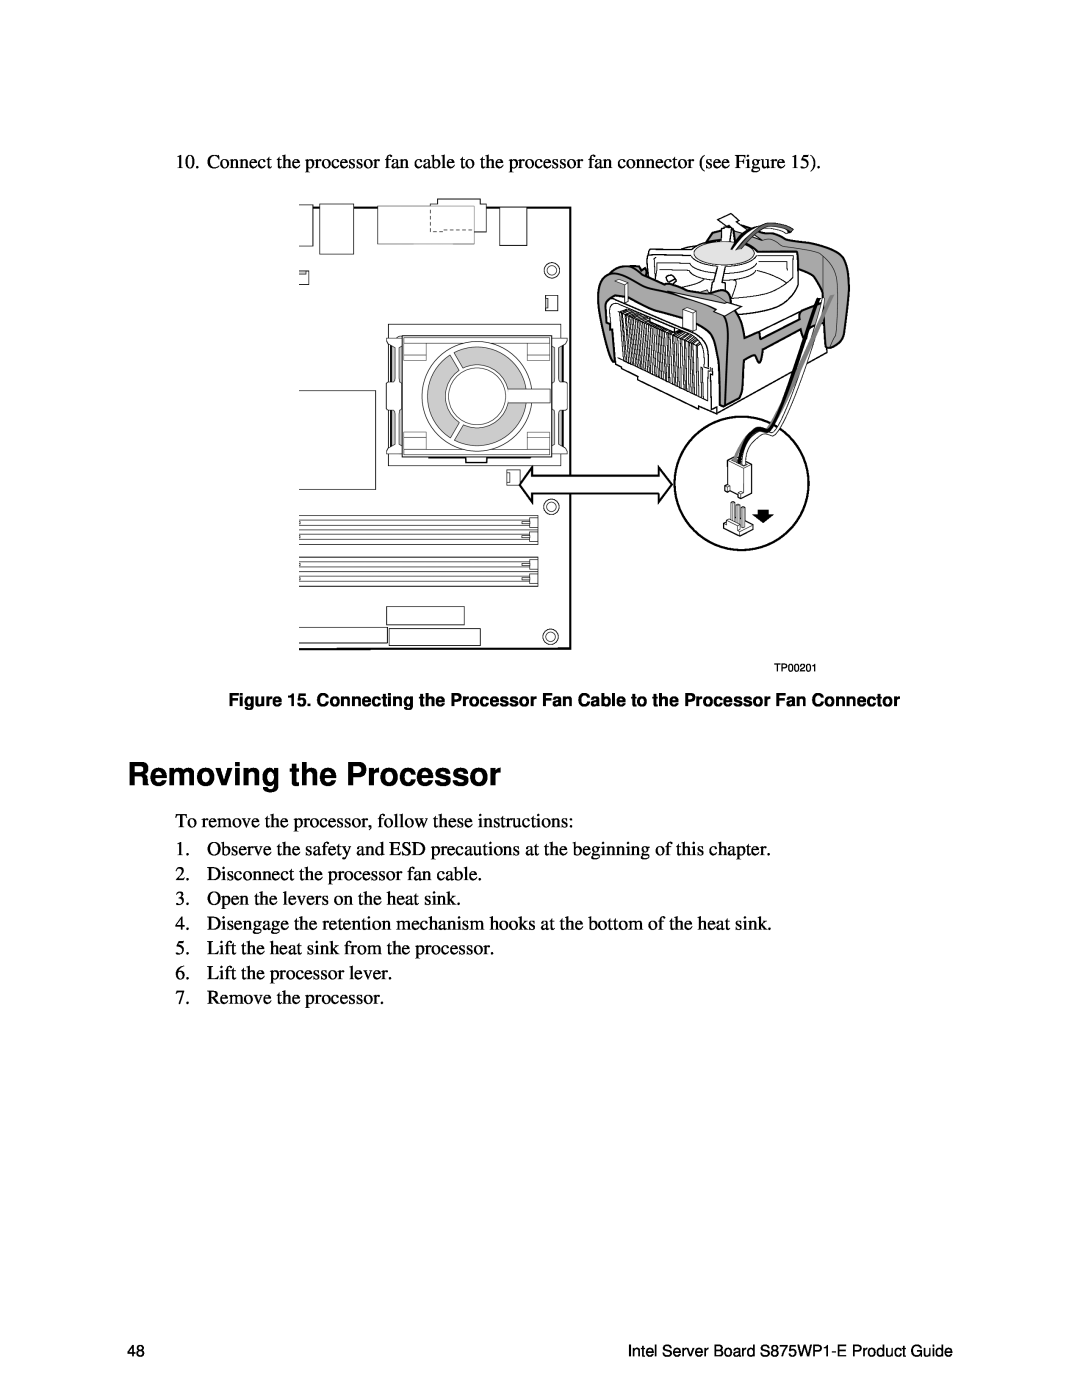 Intel S875WP1-E manual Removing the Processor, TP00201 